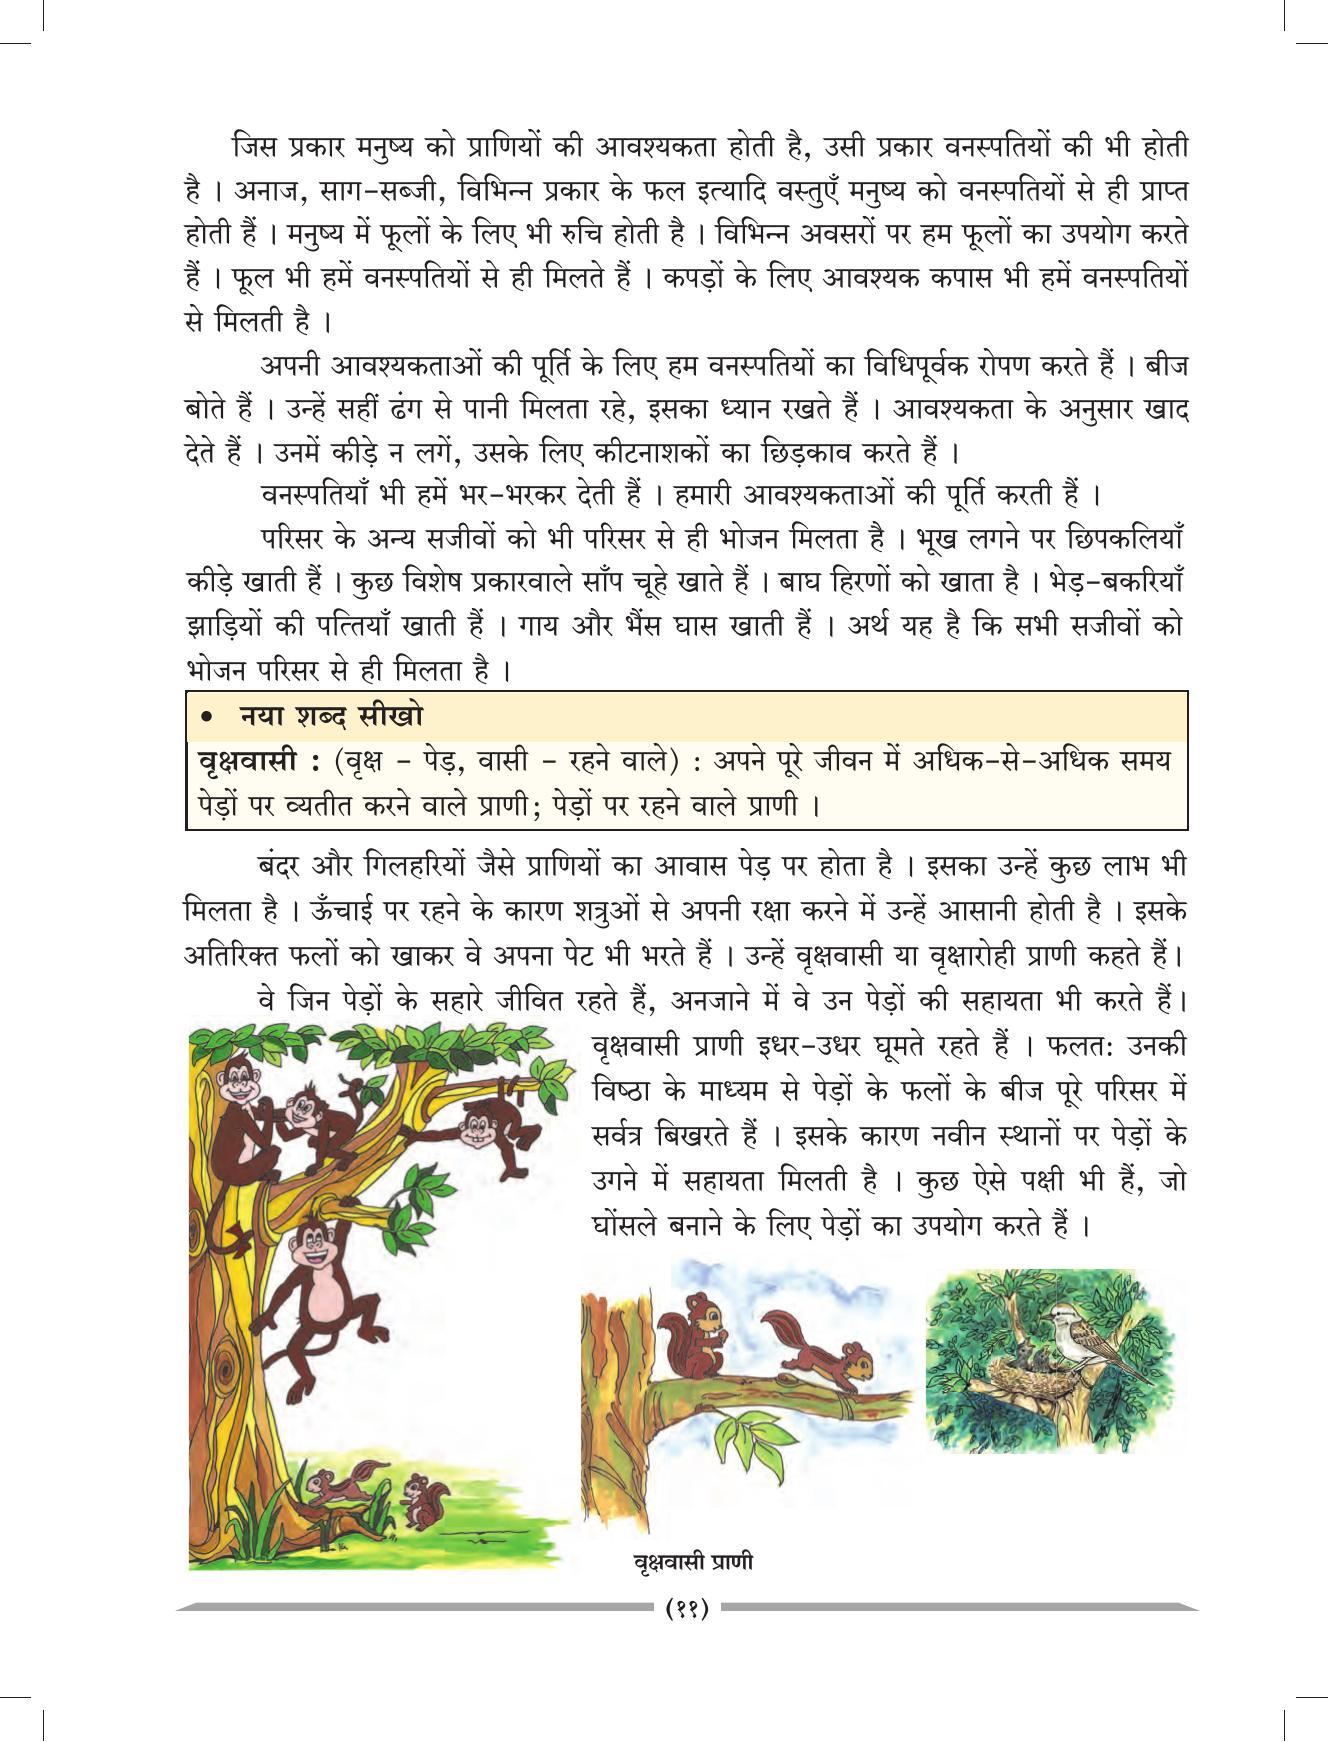 Maharashtra Board Class 4 EVS 1 (Hindi Medium) Textbook - Page 21